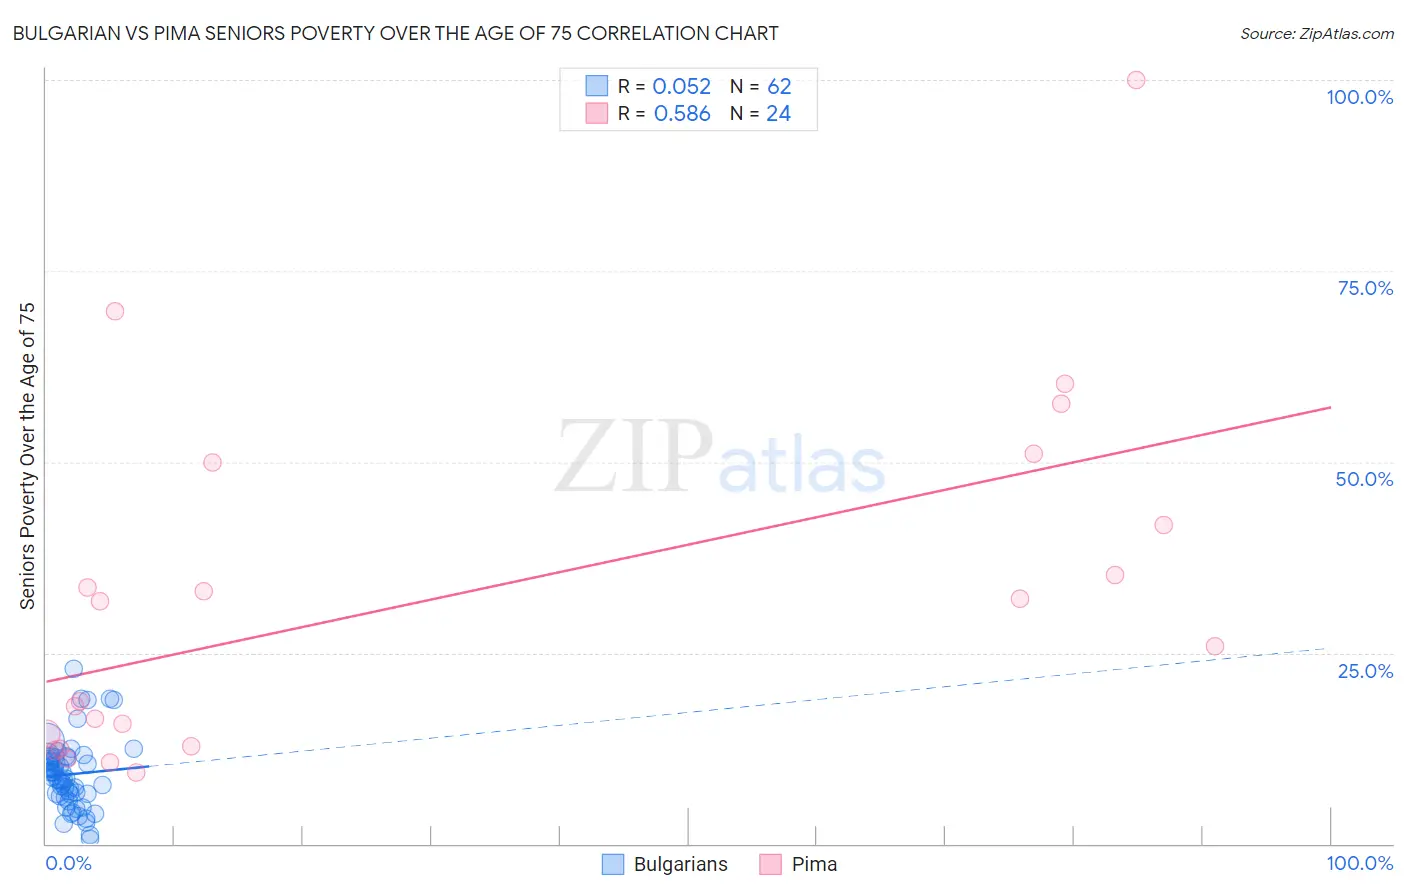 Bulgarian vs Pima Seniors Poverty Over the Age of 75